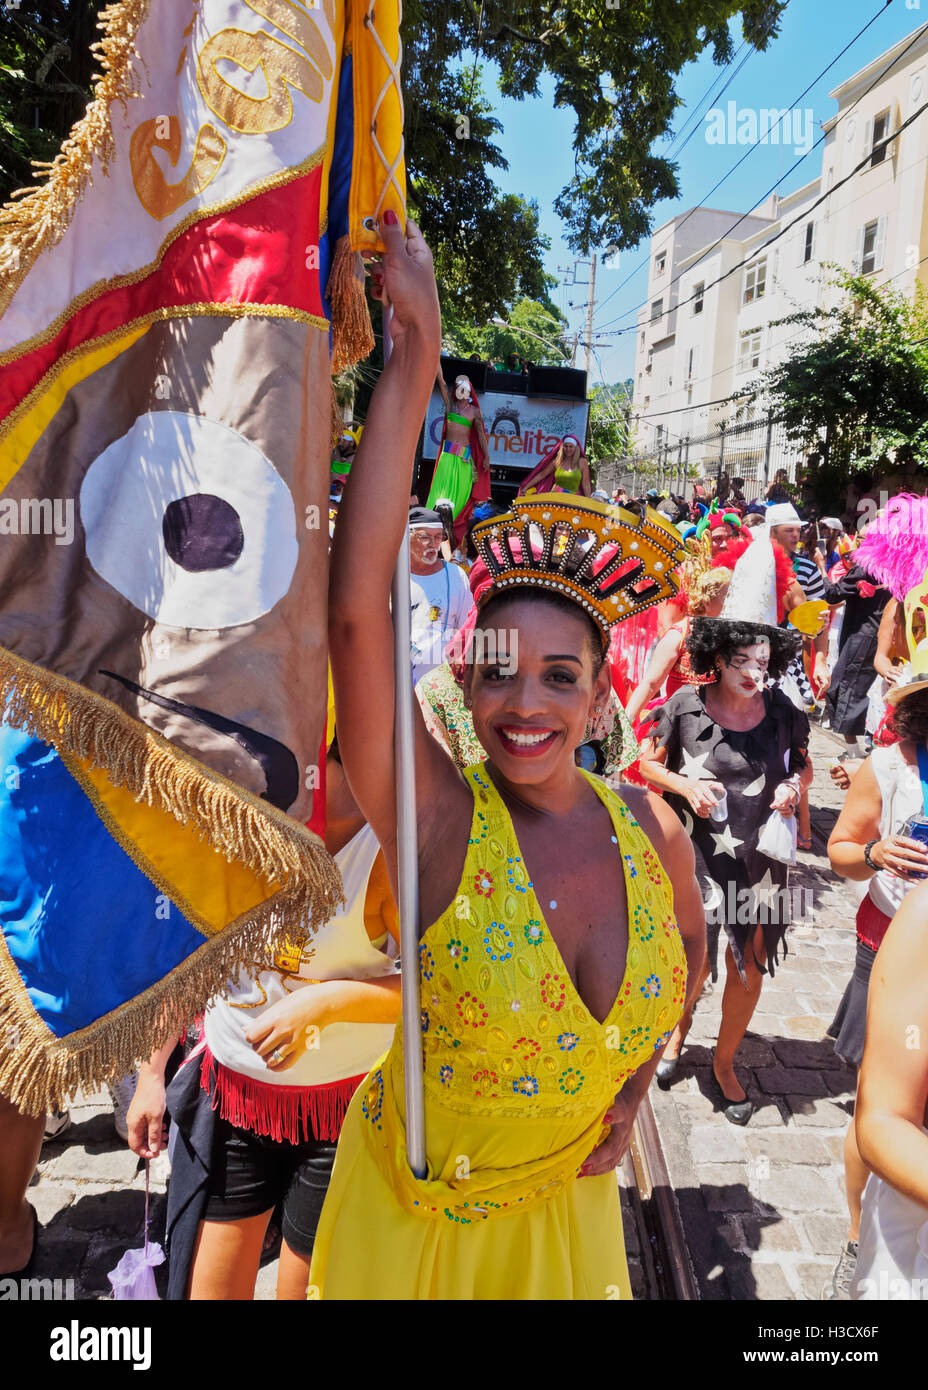 Brasilien, Bundesstaat Rio De Janeiro, Stadt von Rio De Janeiro, Santa Teresa, traditionellen Karneval Parade Bloco Das Carmelitas. Stockfoto